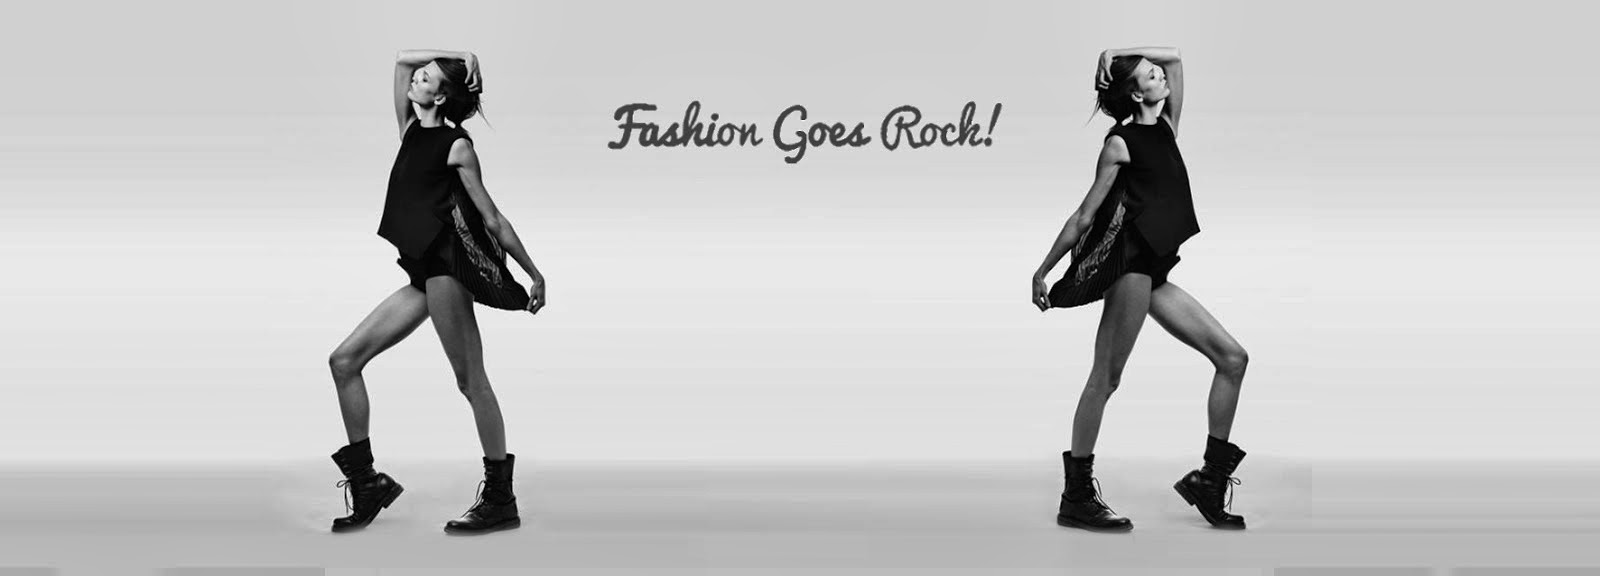 Fashion Goes Rock!